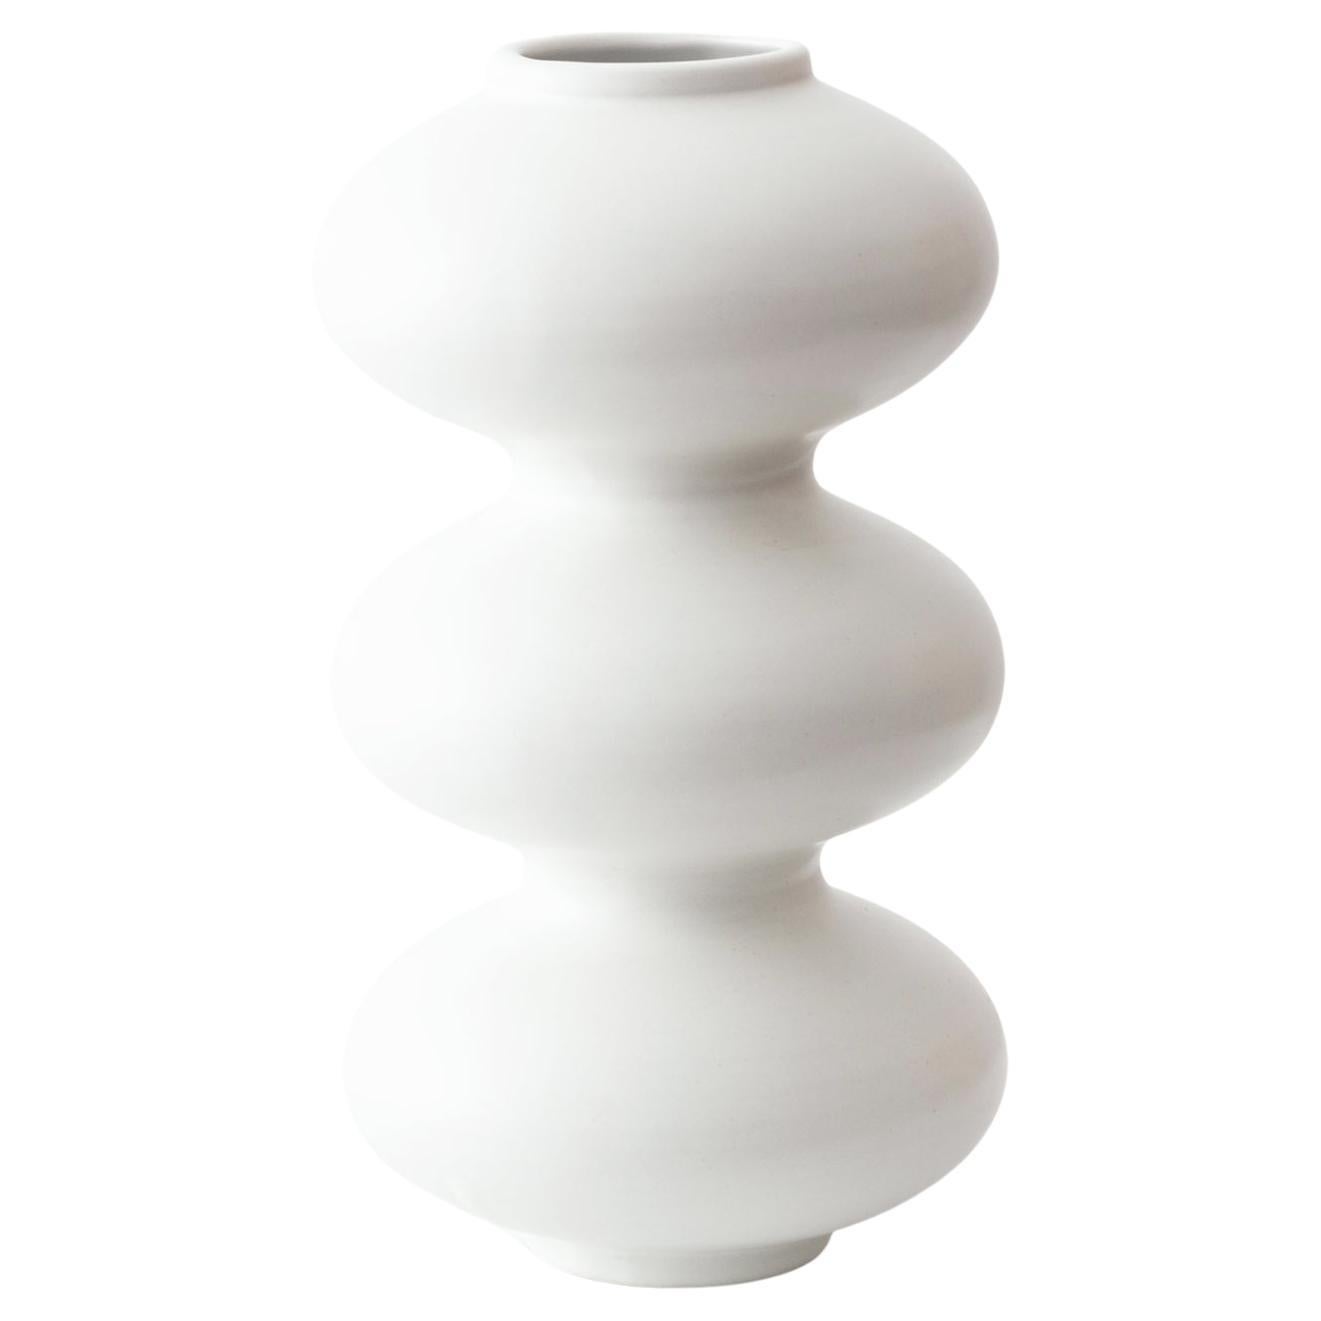 Organic Modern Ceramic Wave Form Vase in White Glaze by Forma Rosa Studio